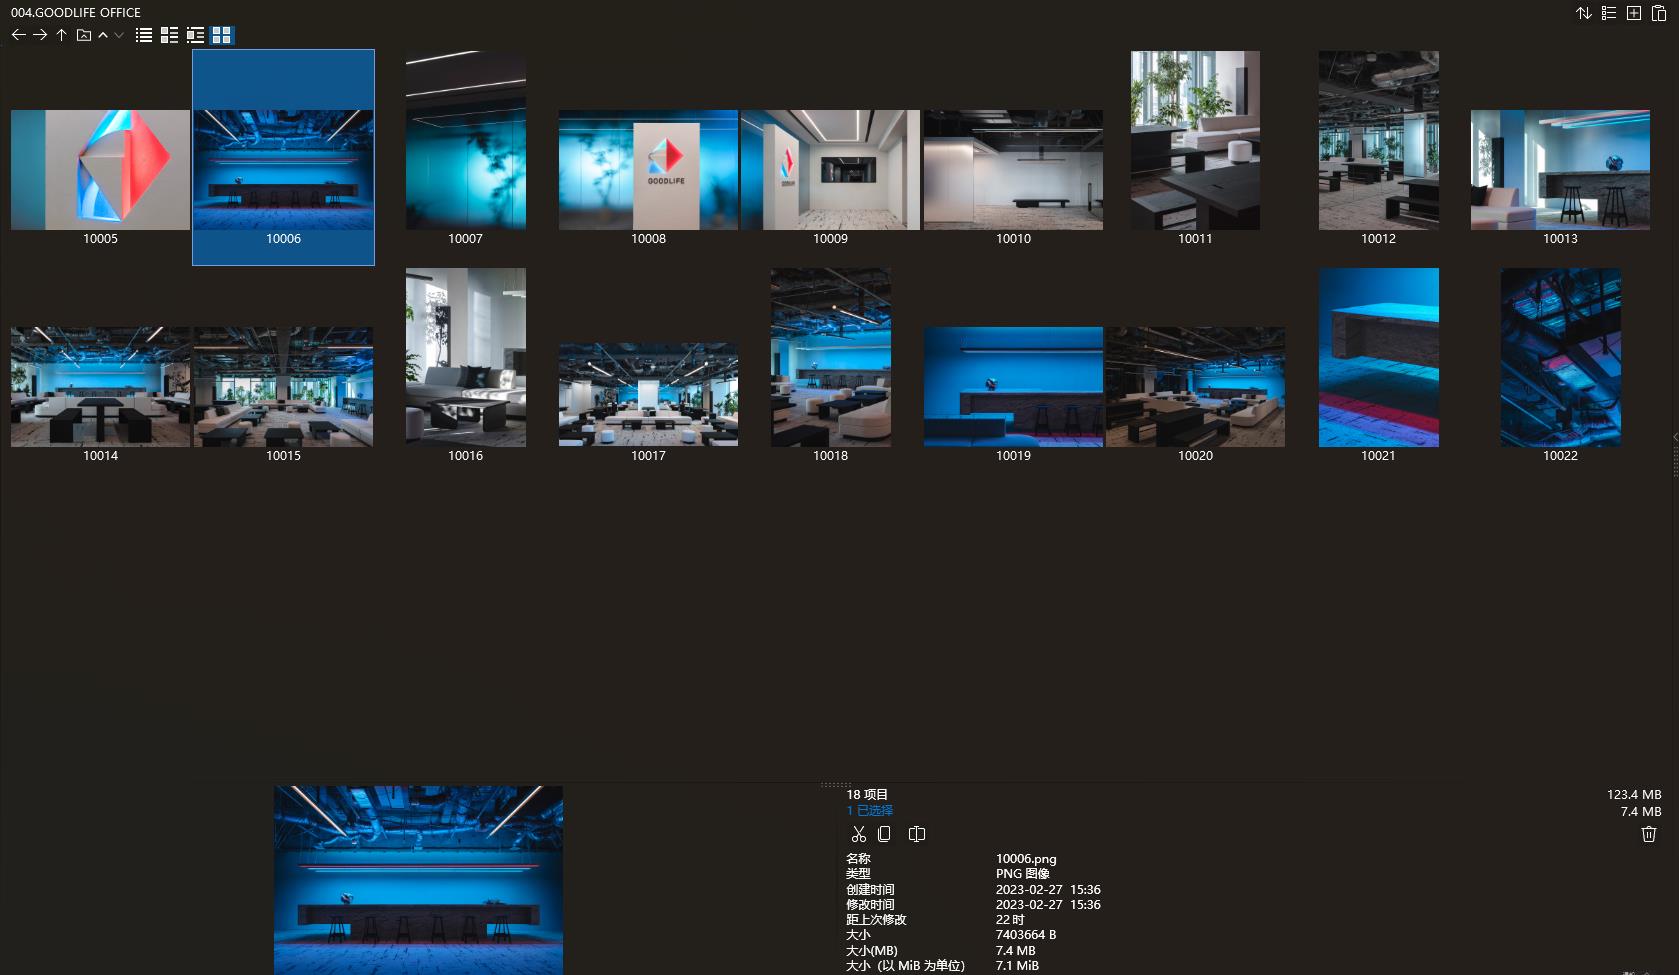 I IN Inc.,商业空间设计案例,东方美学,日本,照井洋平,汤山博,小蓝瓶咖啡,BLUE BOTTLE COFFEE